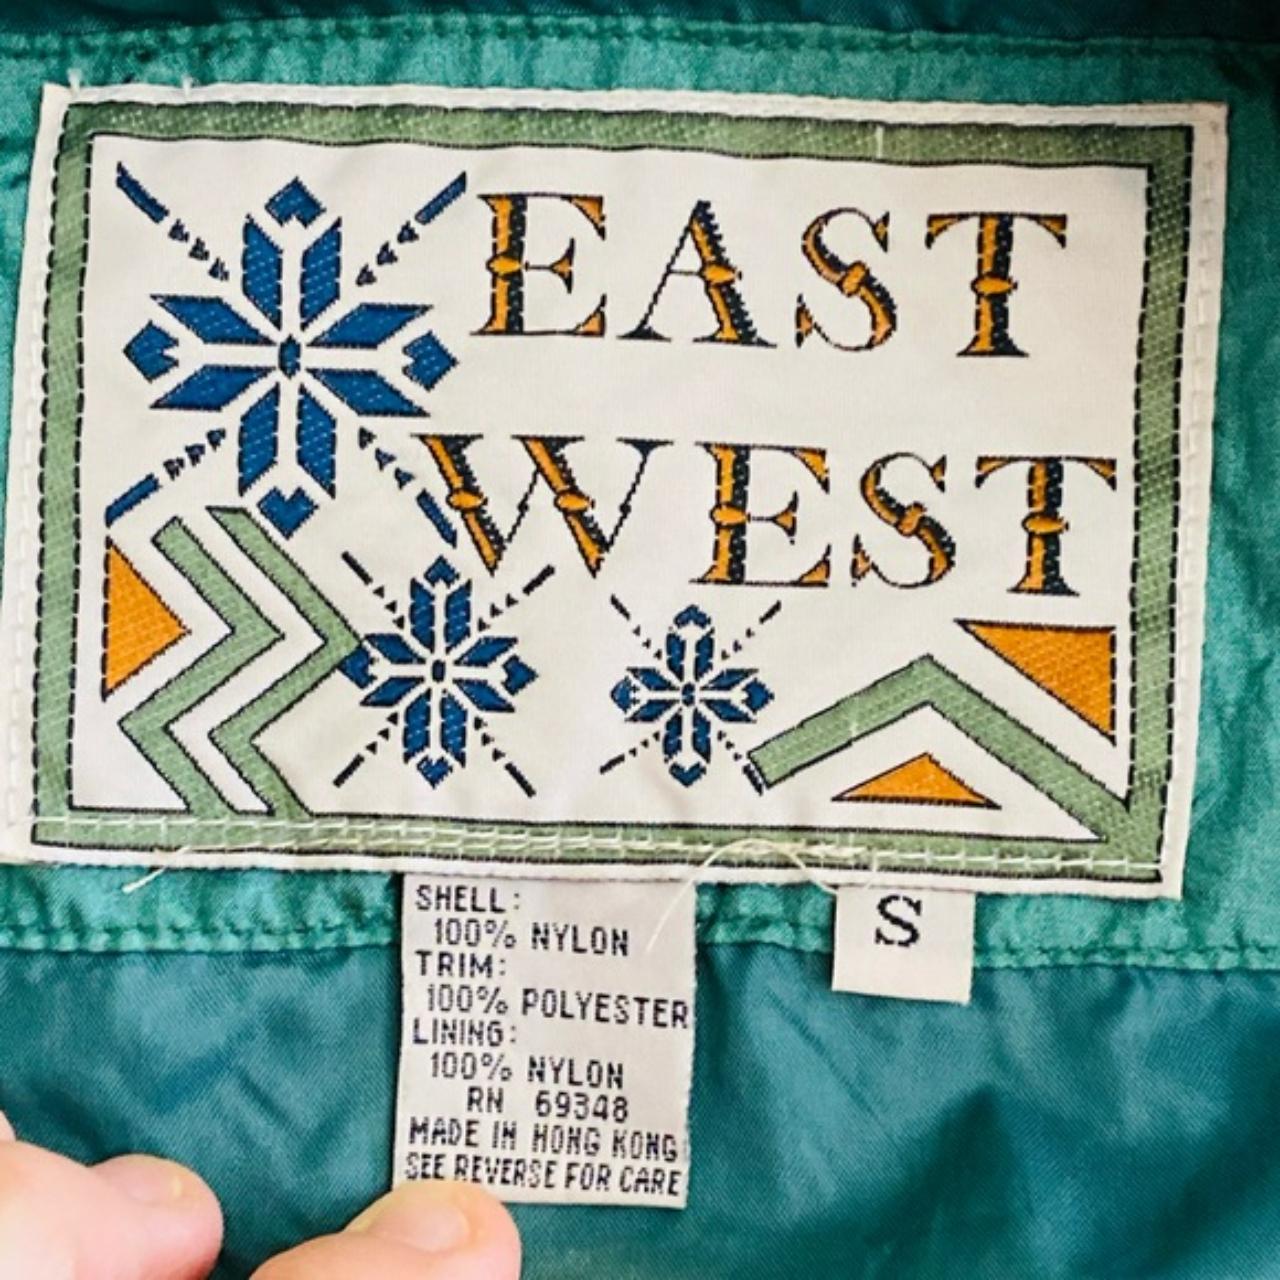 East West Men's multi Jacket (4)